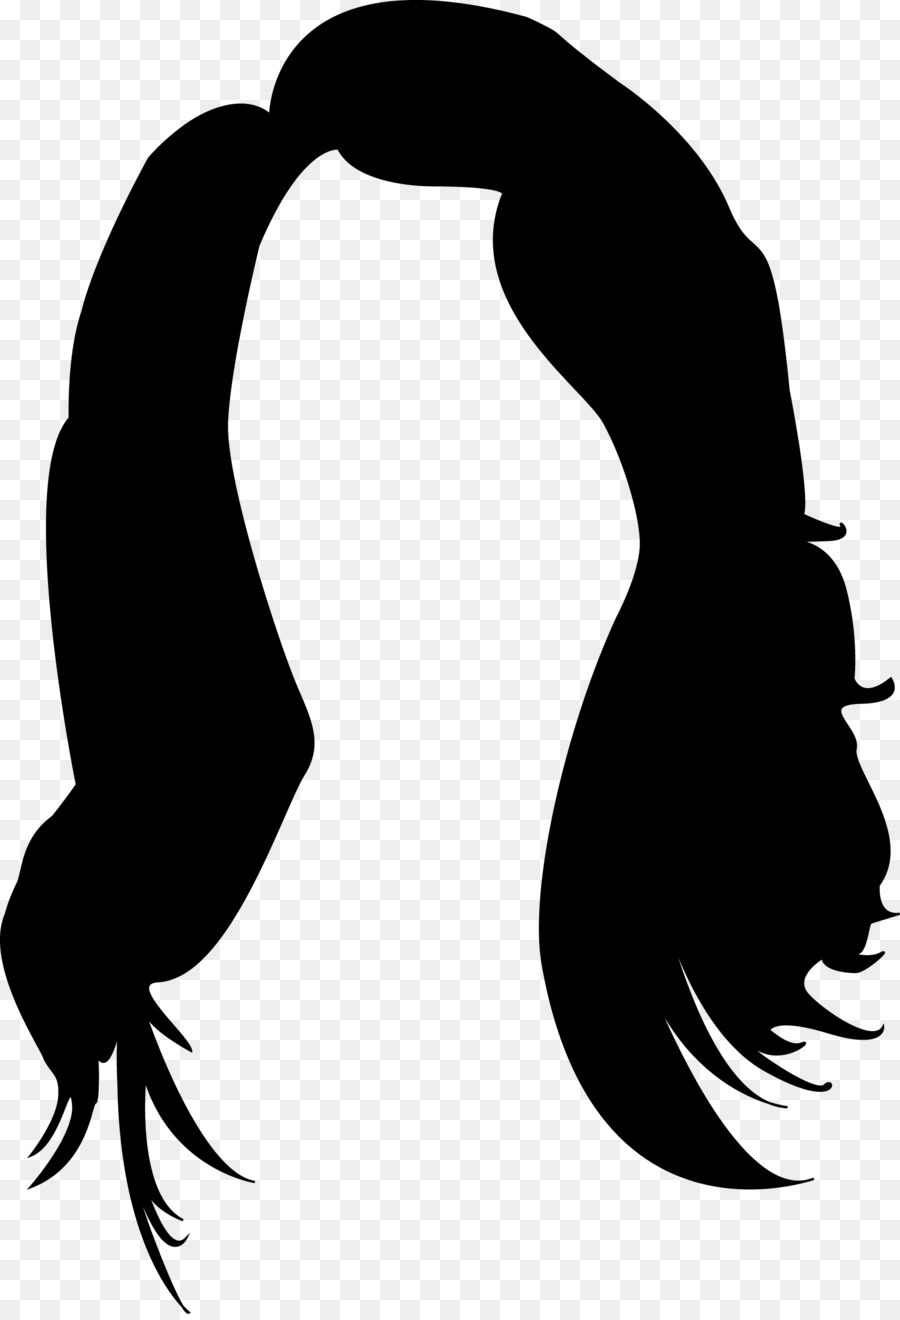 Long hair Black hair - black hair png download - 1706*2490 - Free Transparent Hair png Download.